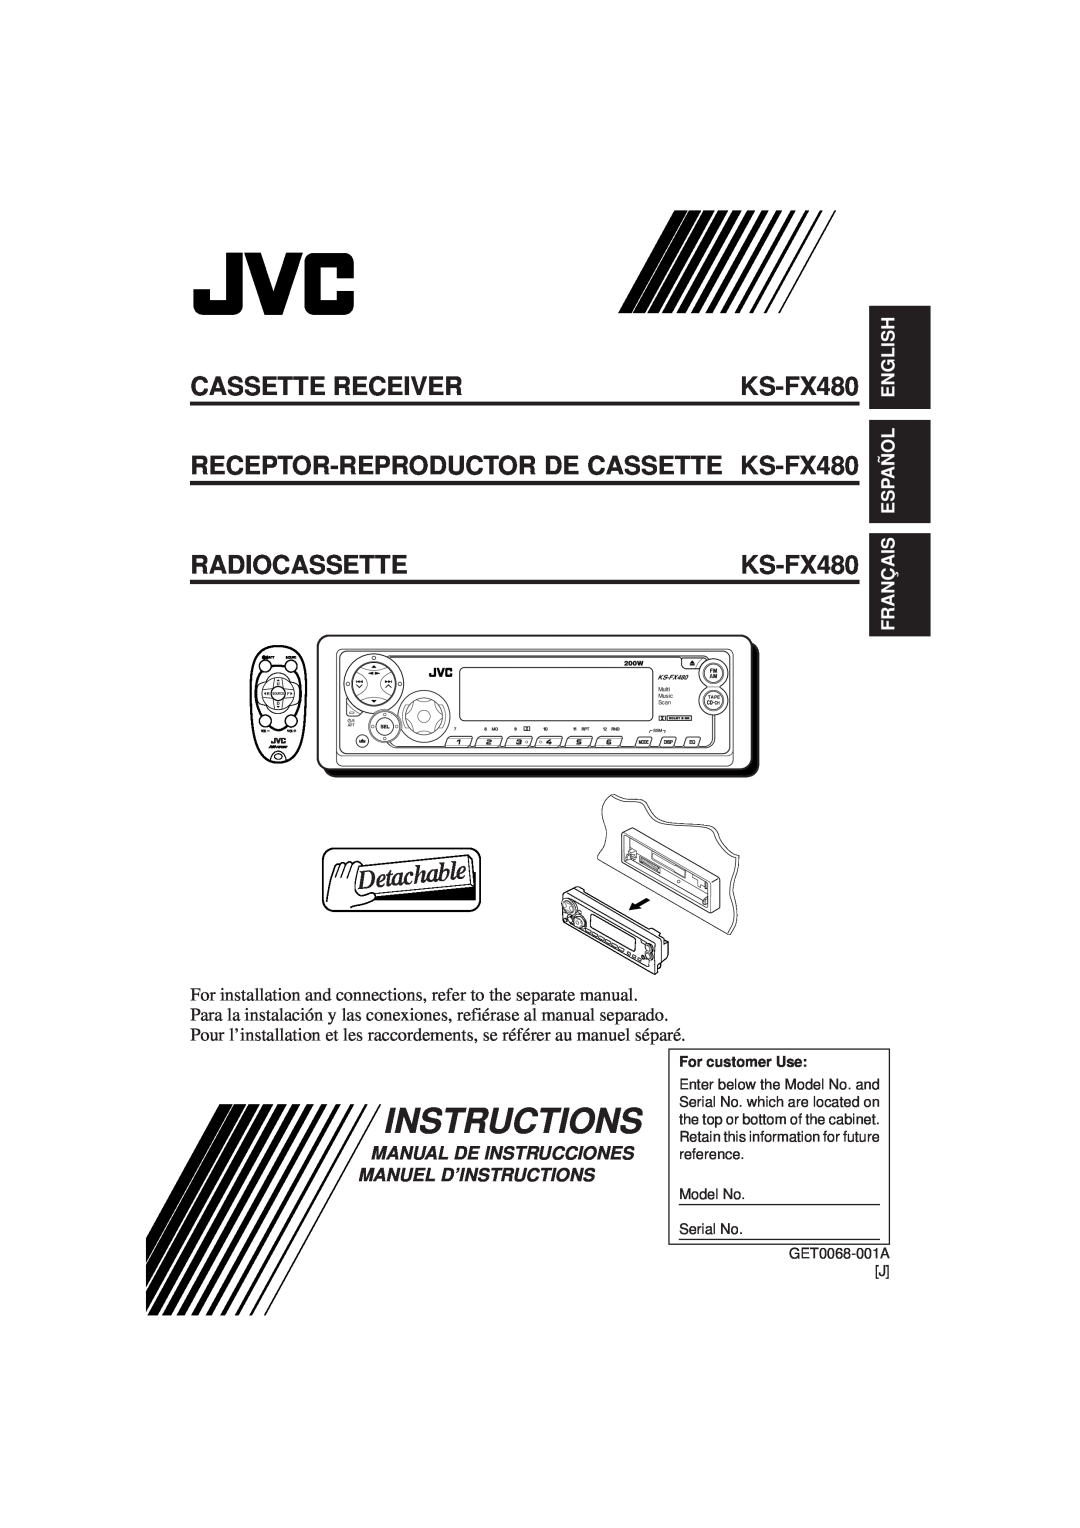 JVC KS-FX480J manual Cassette Receiver, RECEPTOR-REPRODUCTORDE CASSETTE KS-FX480, Radiocassette, English, Español 